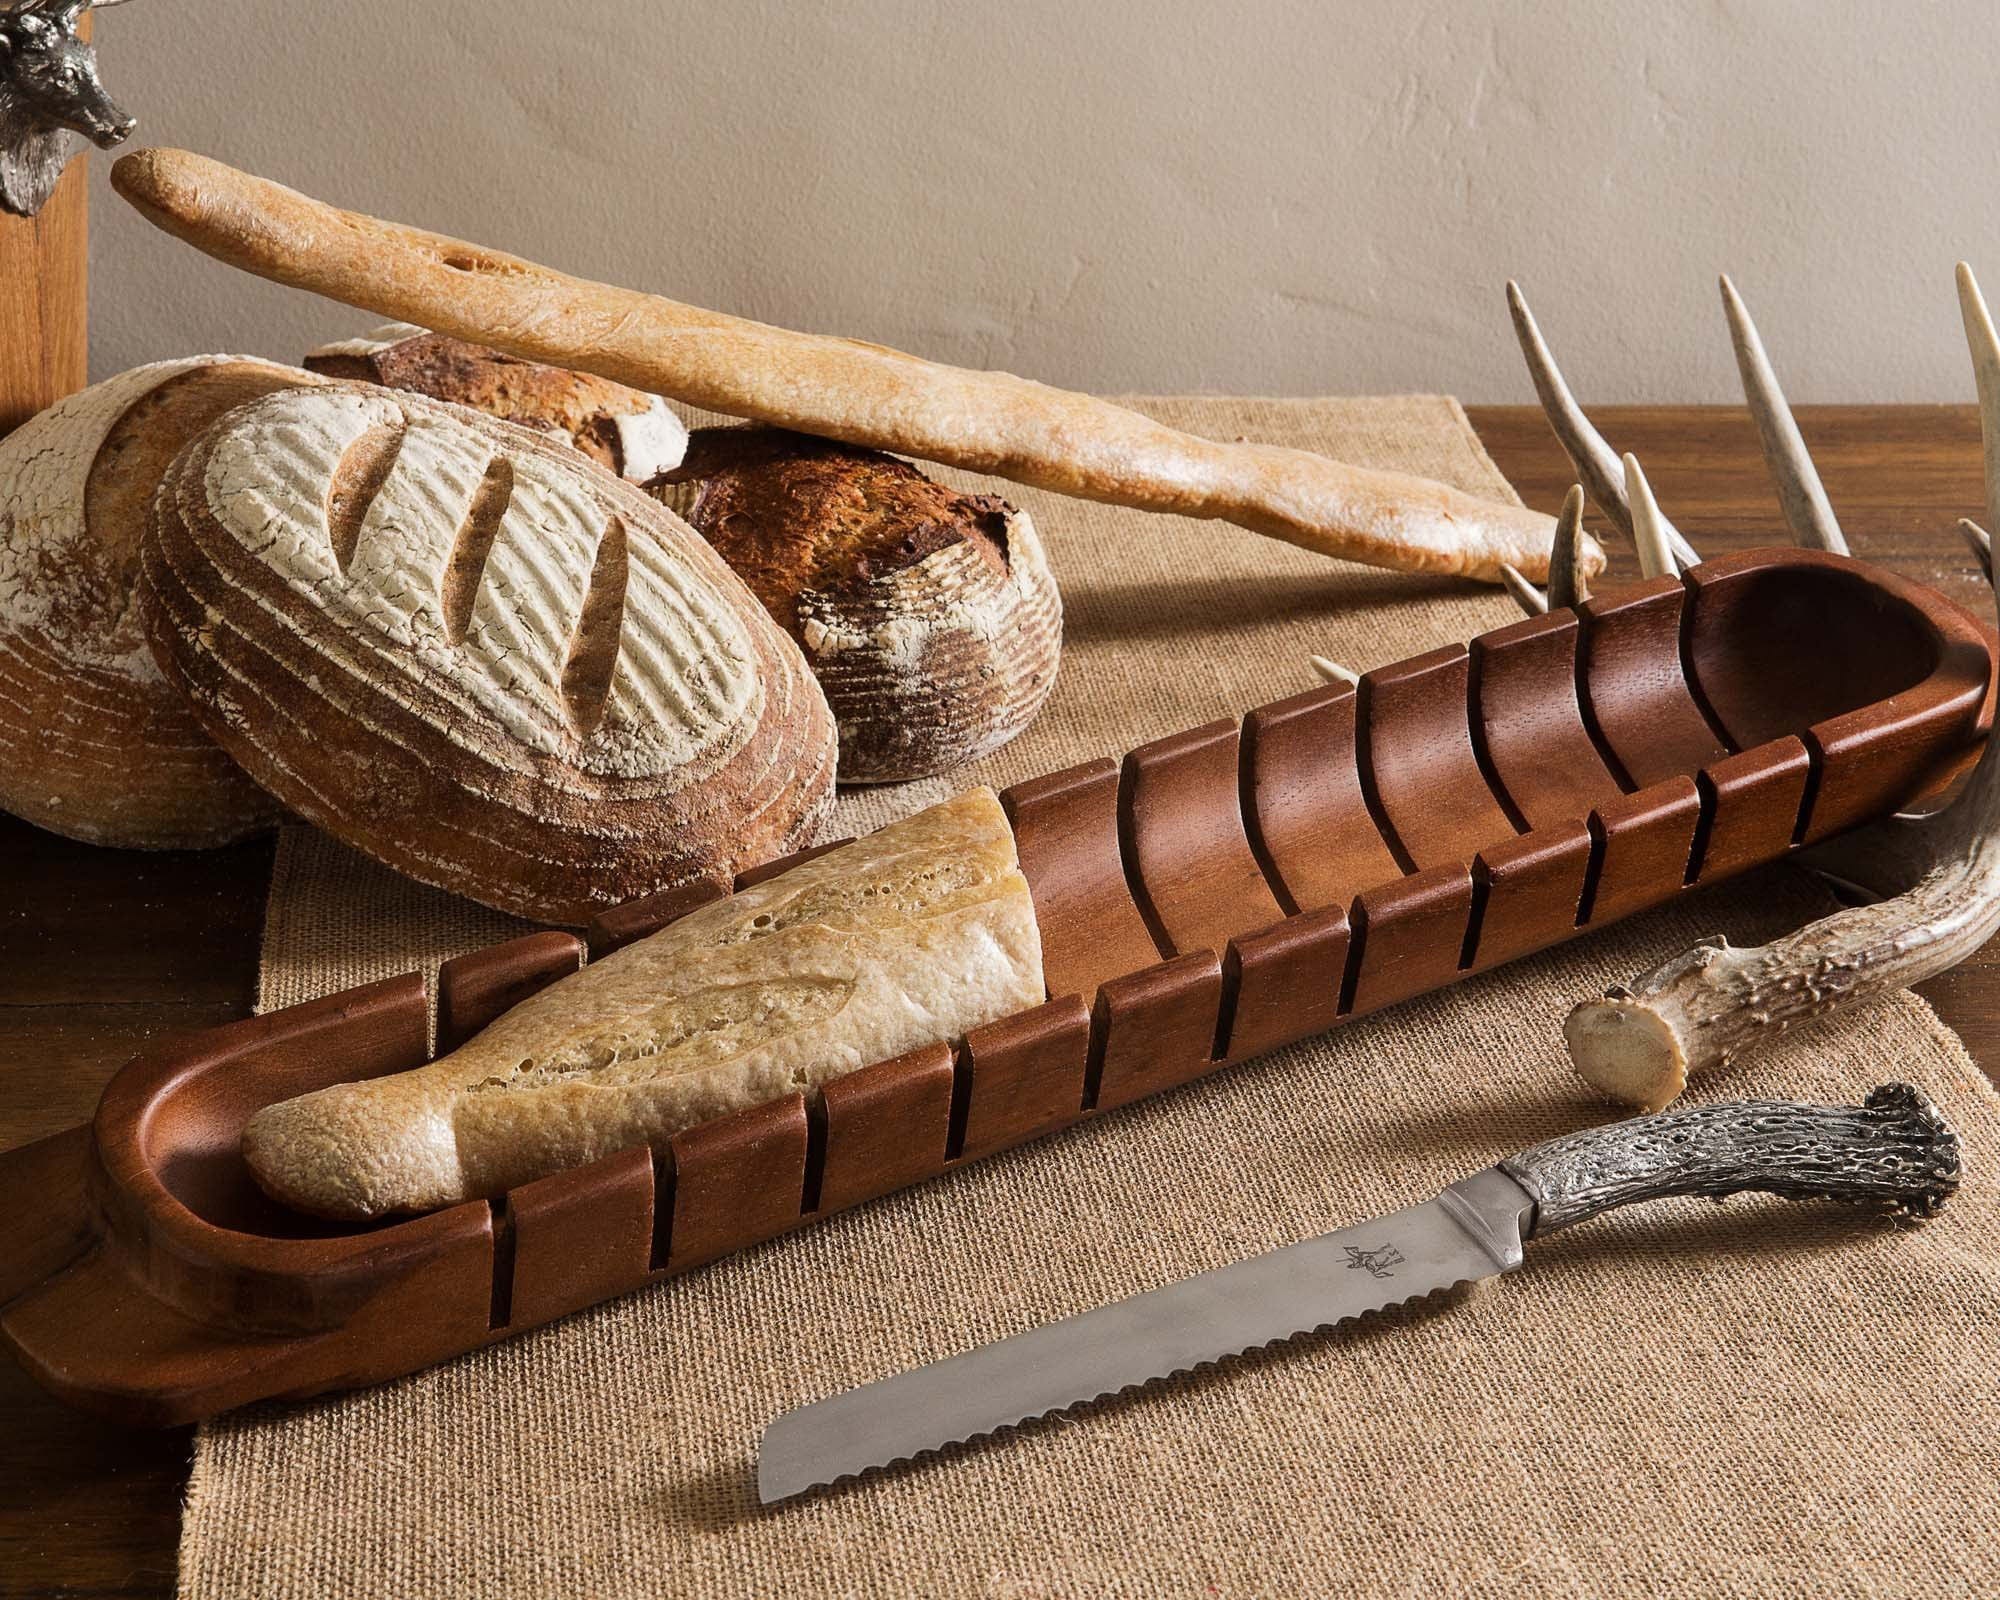  Bread Saw: Home & Kitchen